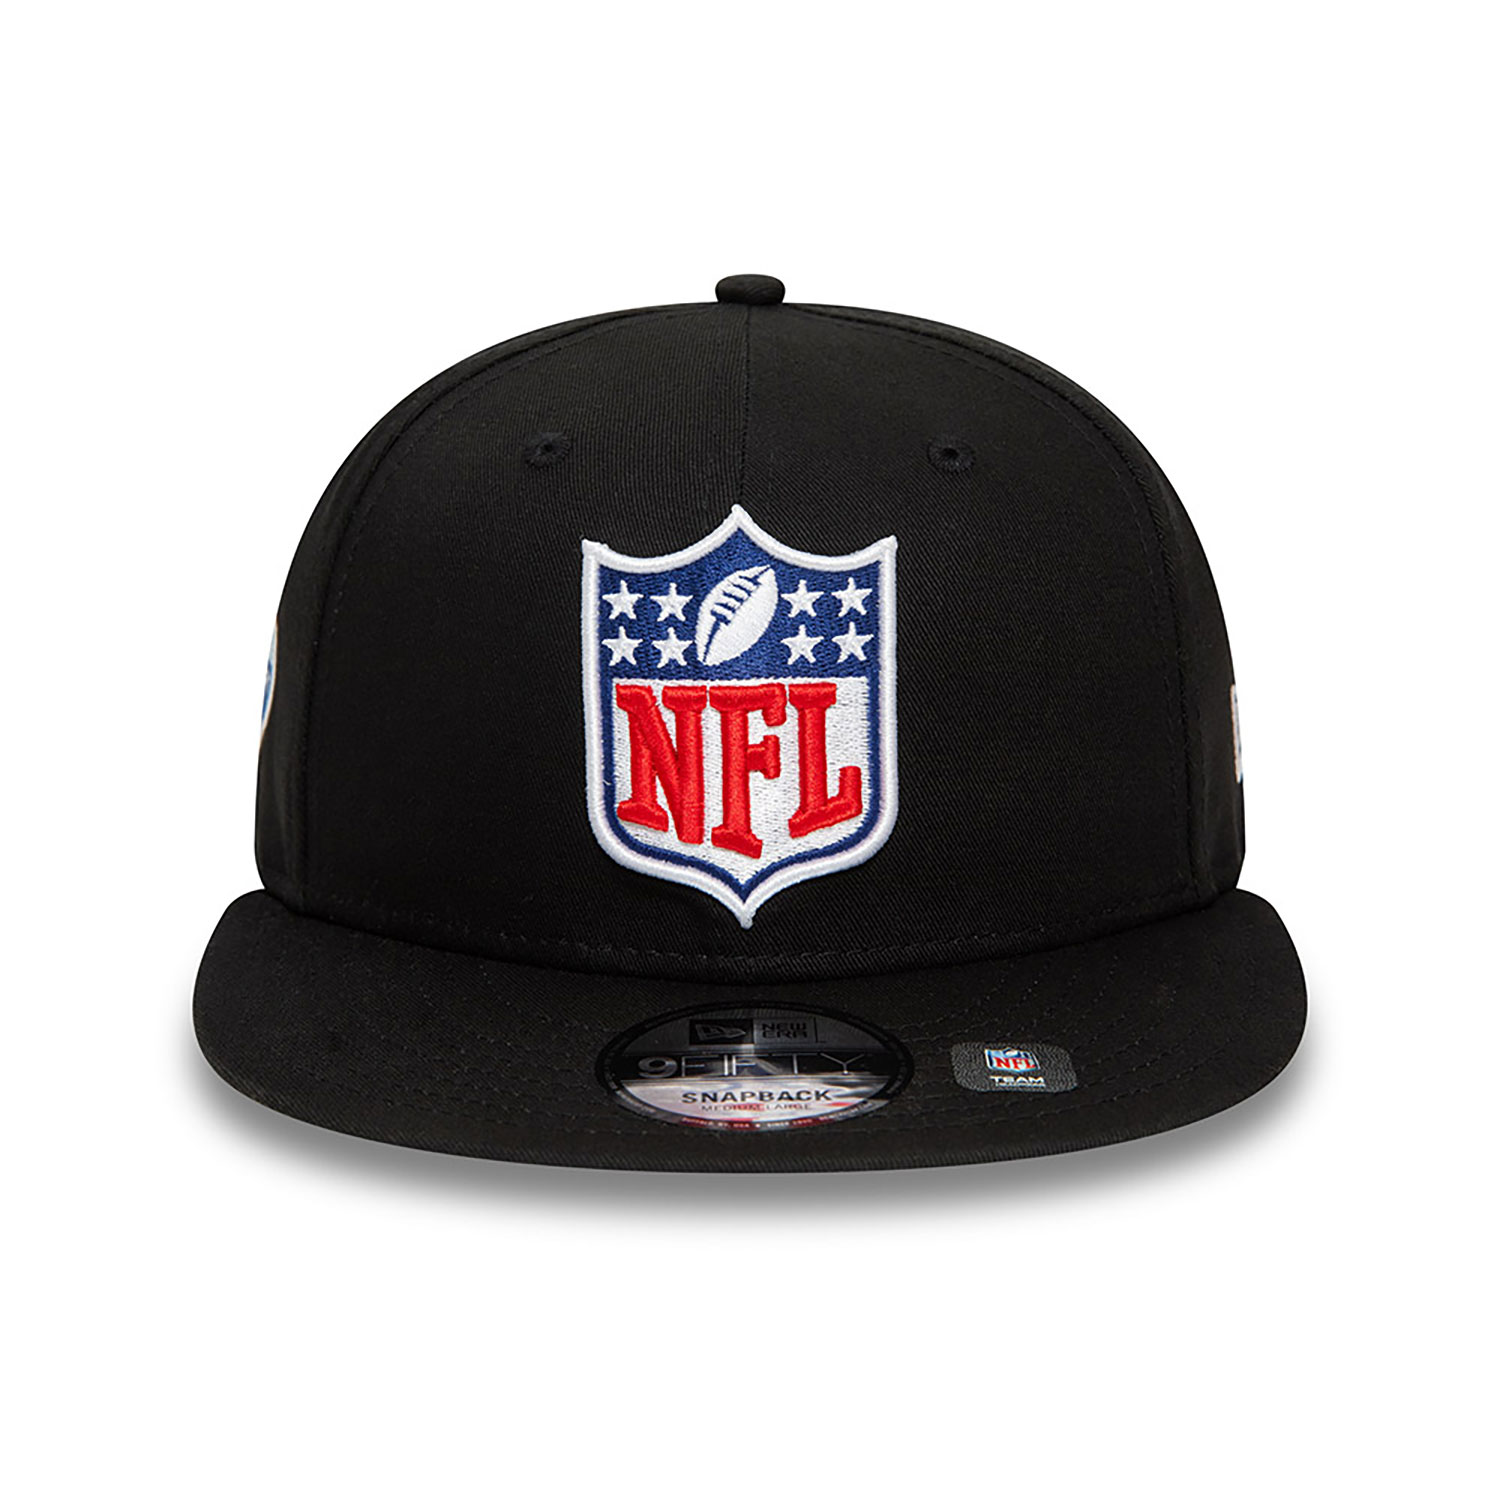 NFL Frankfurt Games Shield Black 9FIFTY Snapback Cap